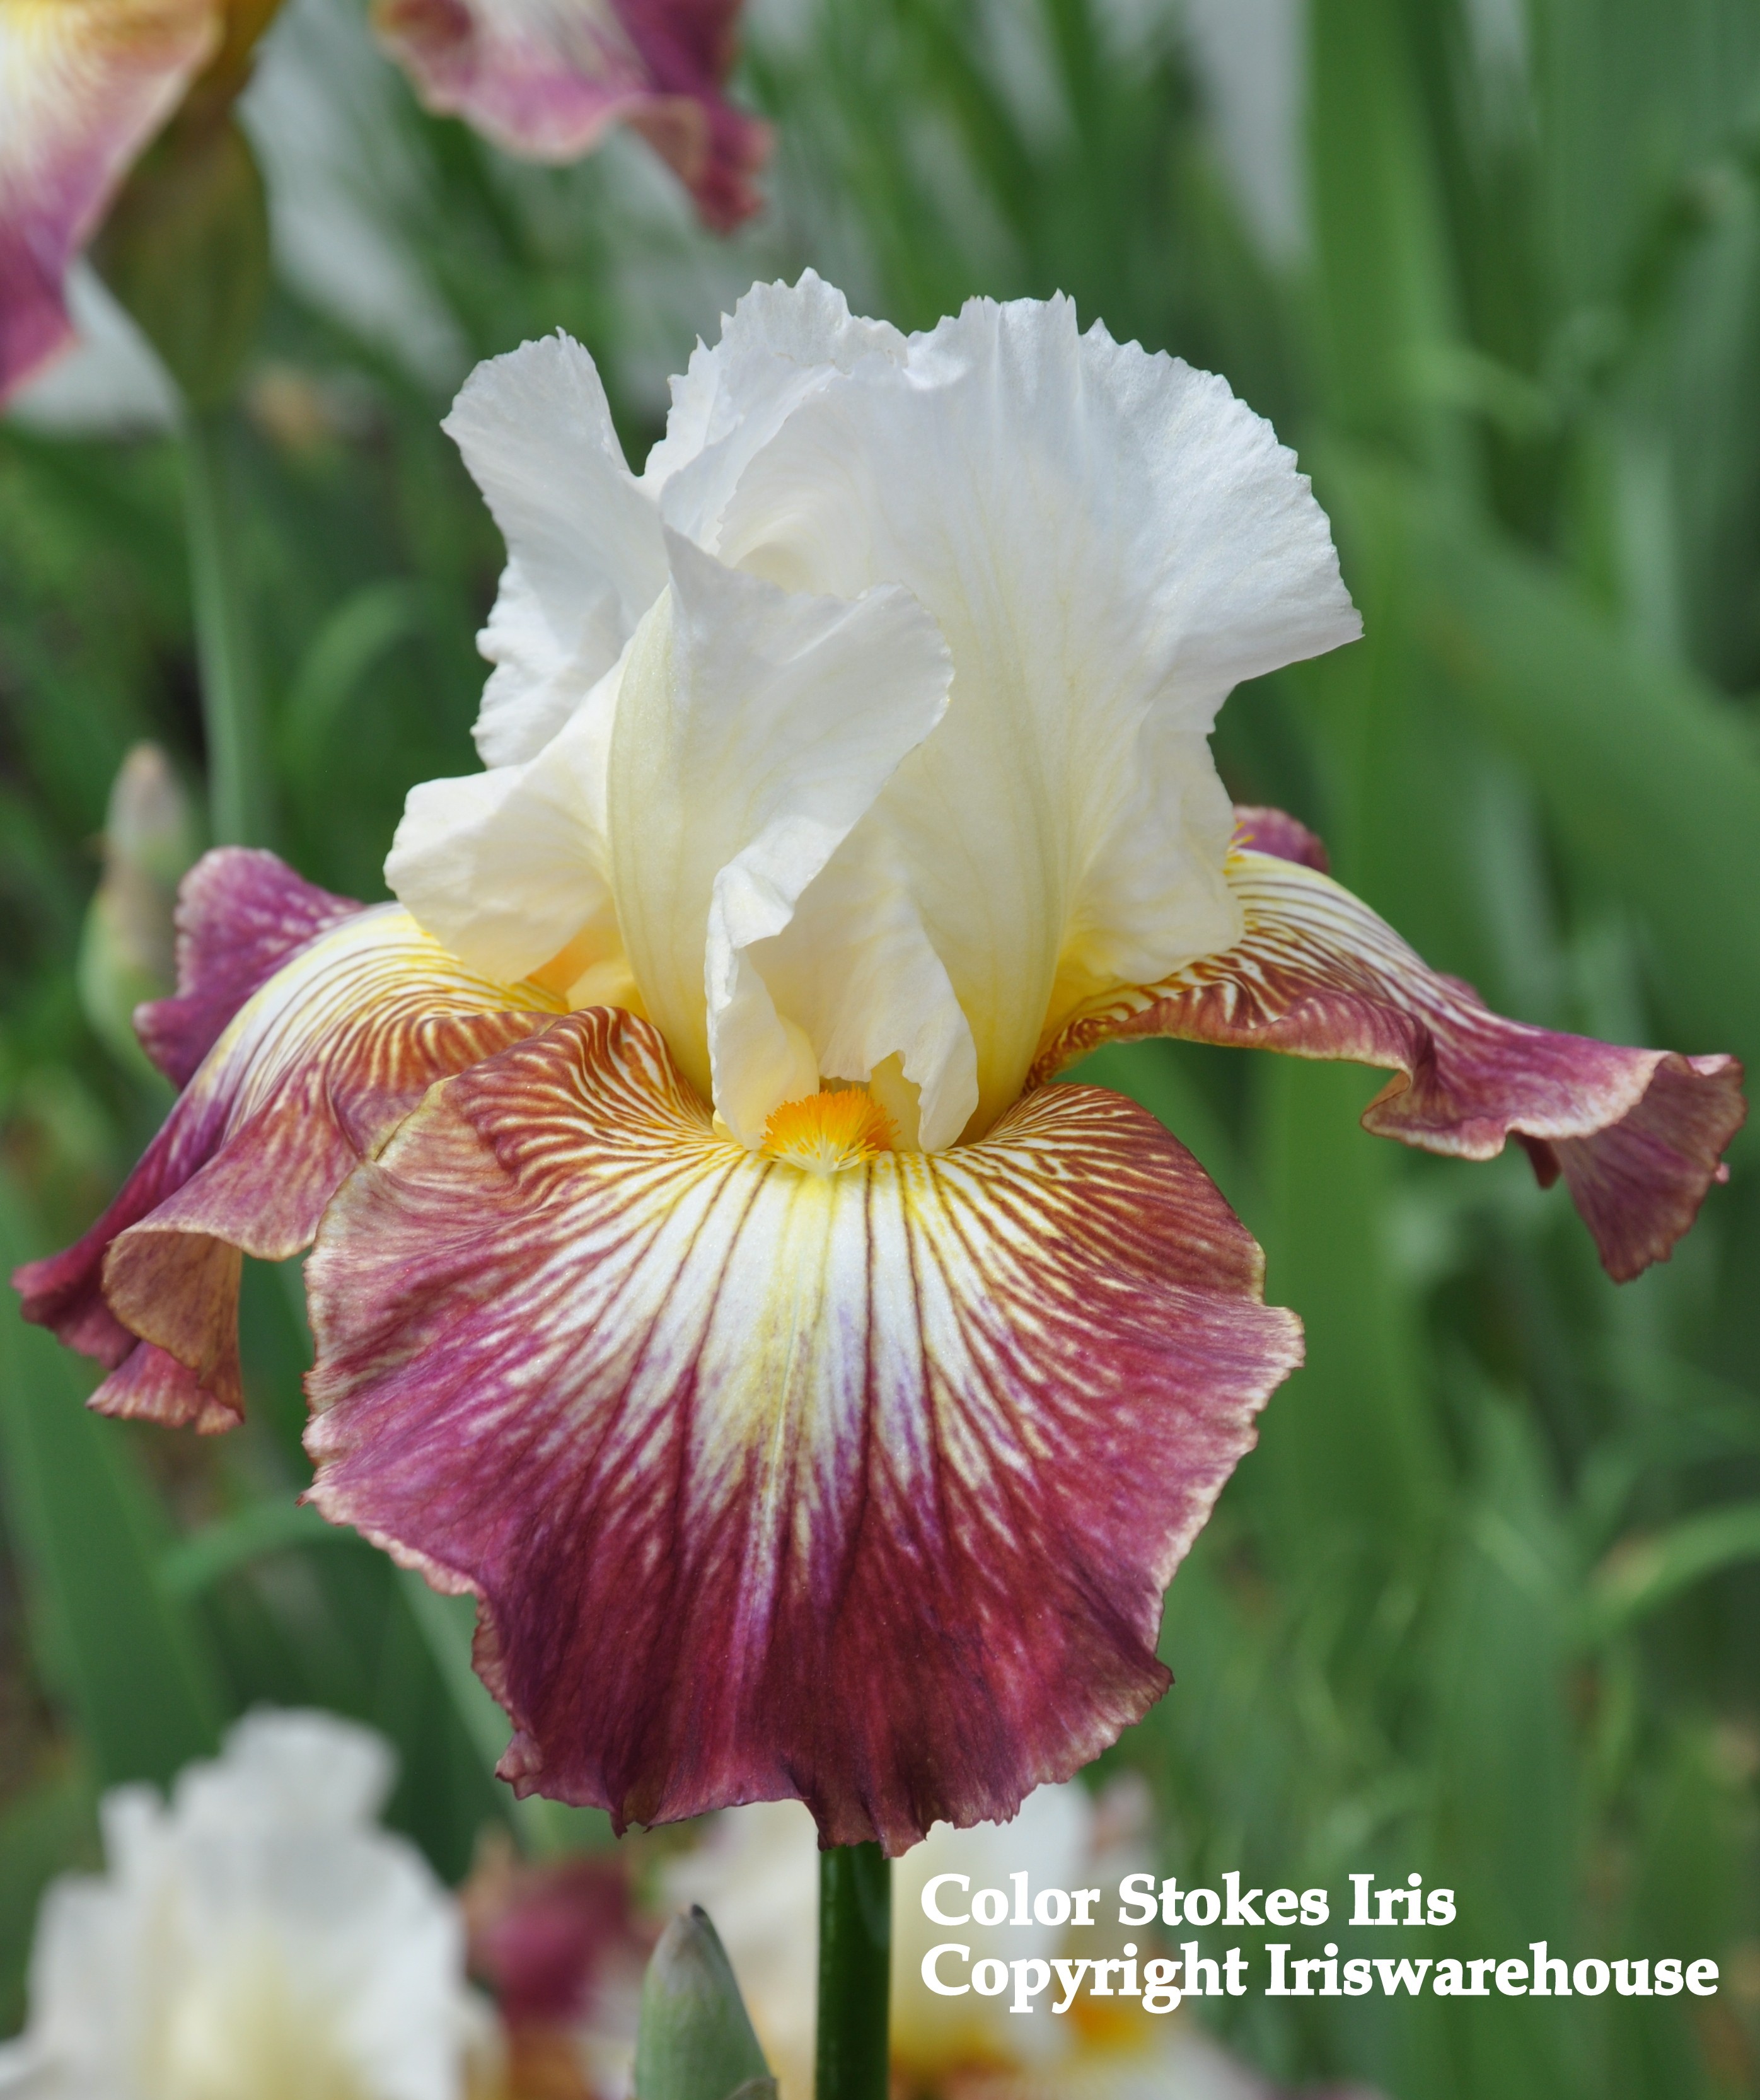 Color Strokes Iris